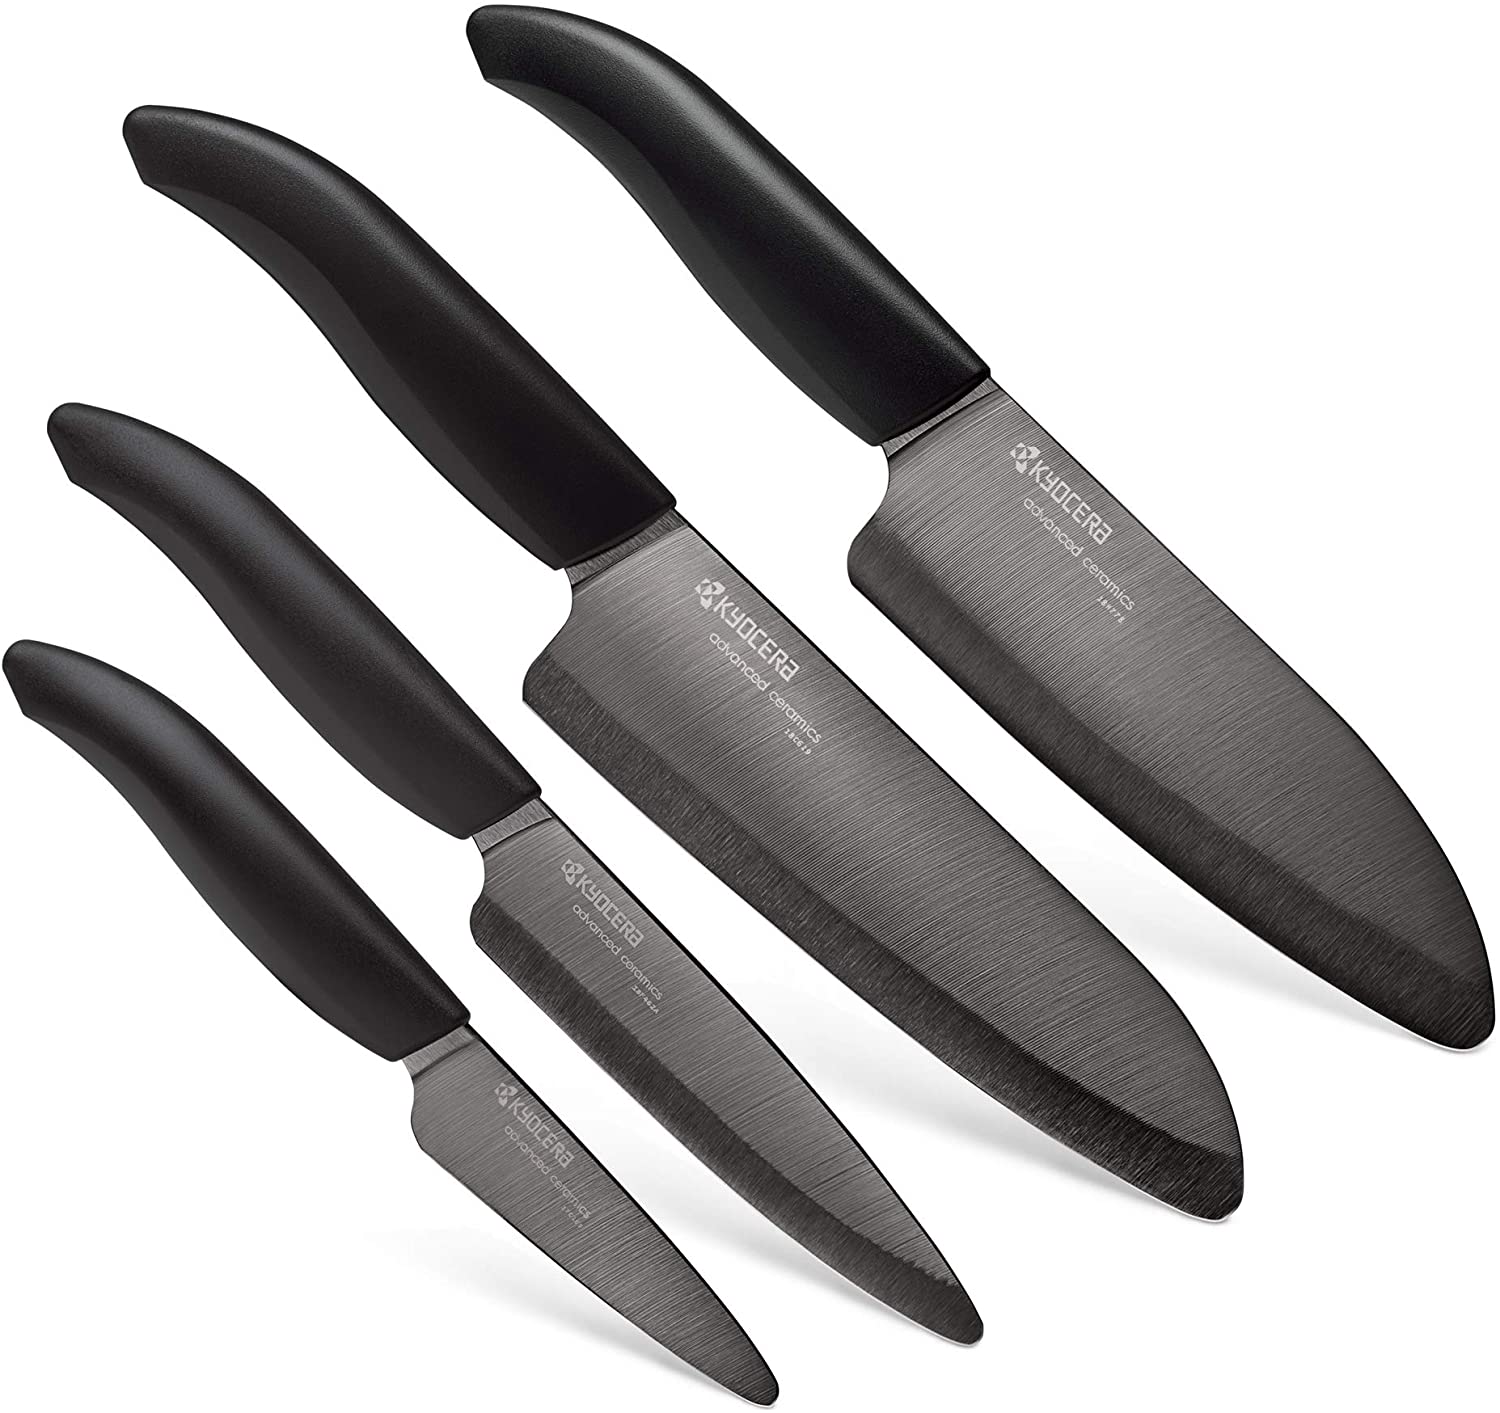 Kyocera 4 1/2 inch Ceramic Utility Knife & Y-Peeler Set - Black